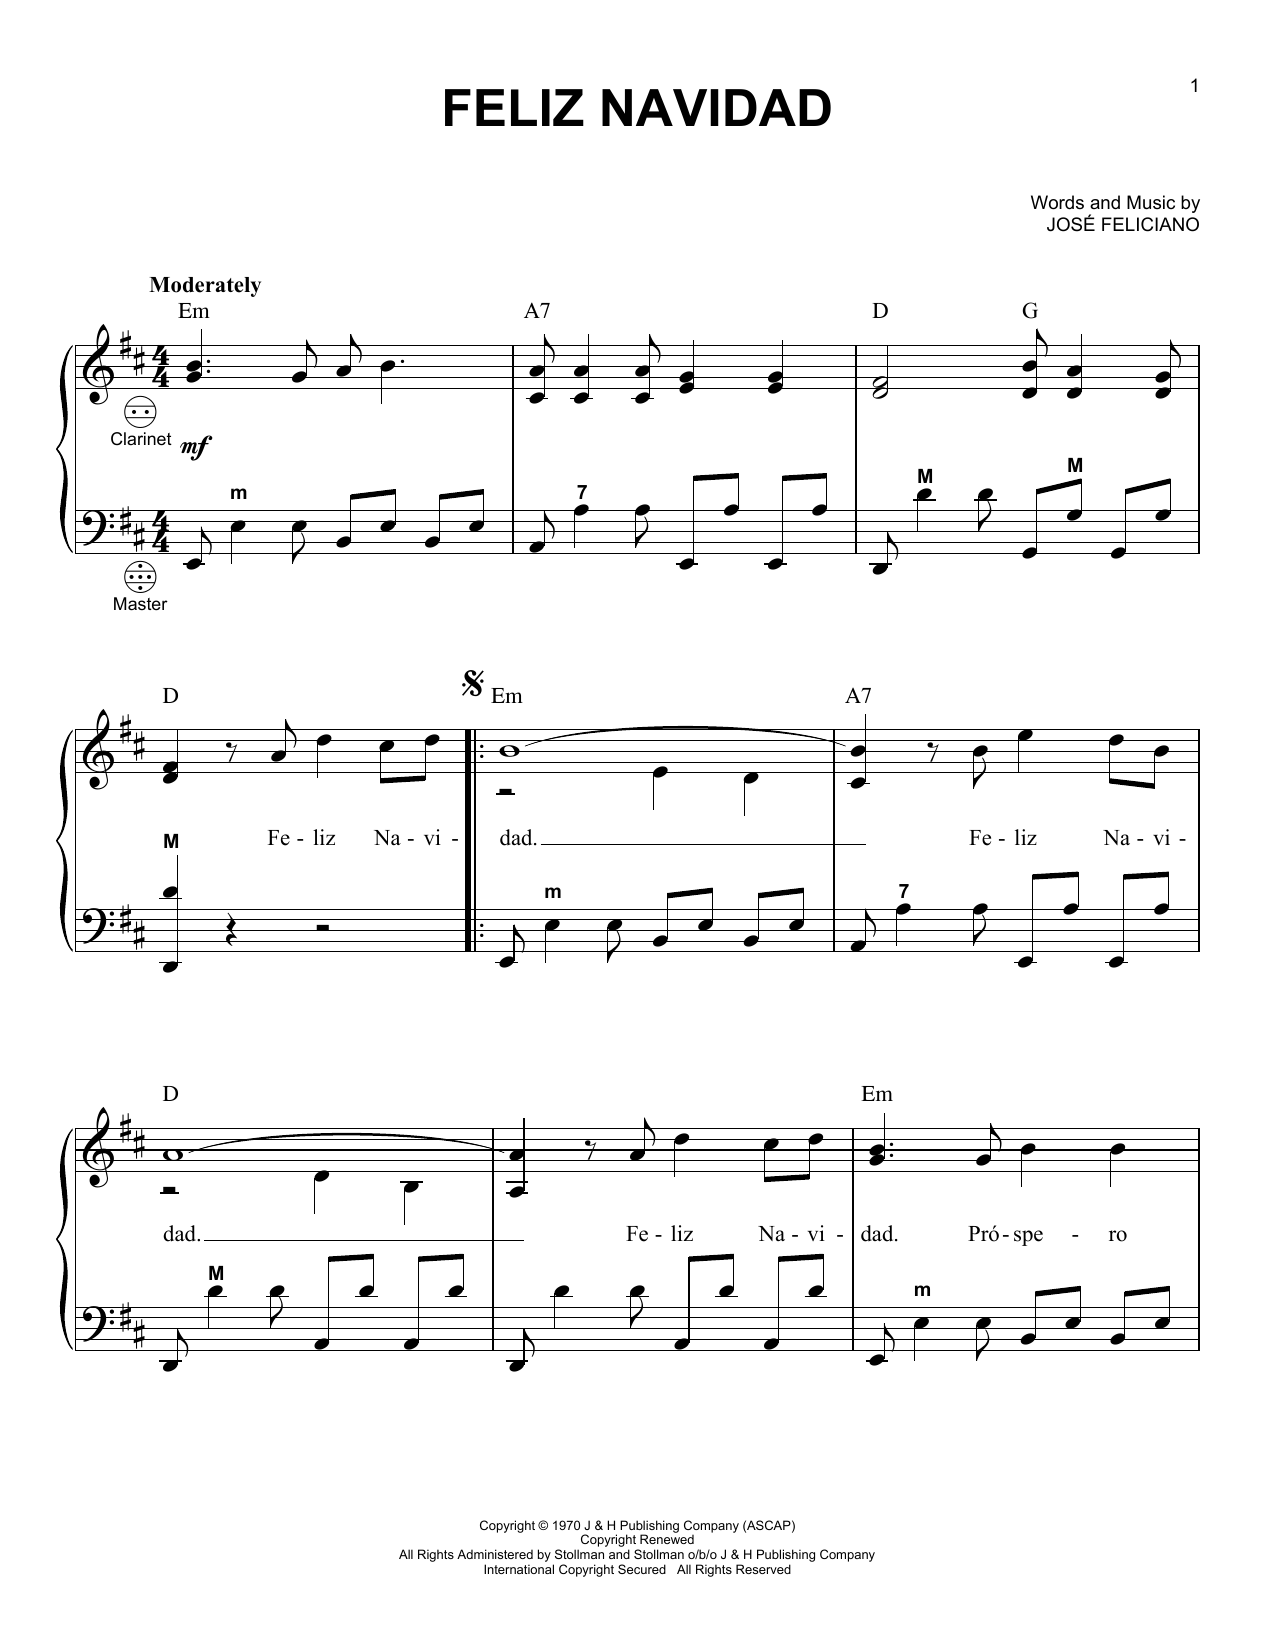 Download Gary Meisner Feliz Navidad Sheet Music and learn how to play Accordion PDF digital score in minutes